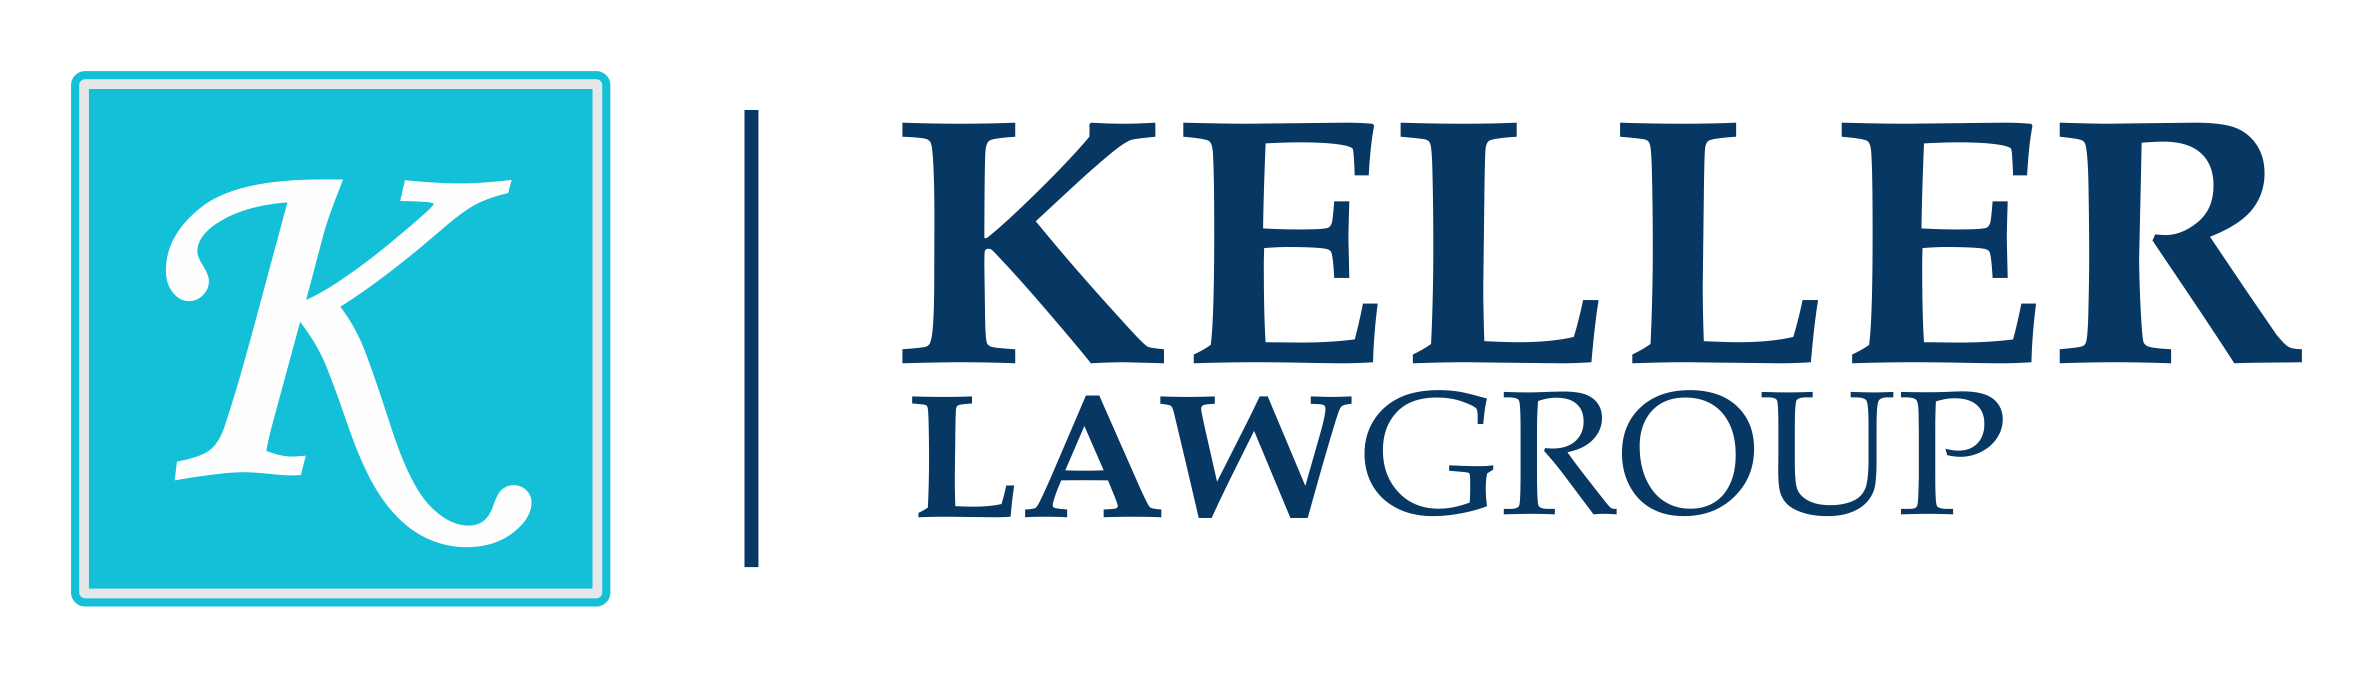 Keller Law Group